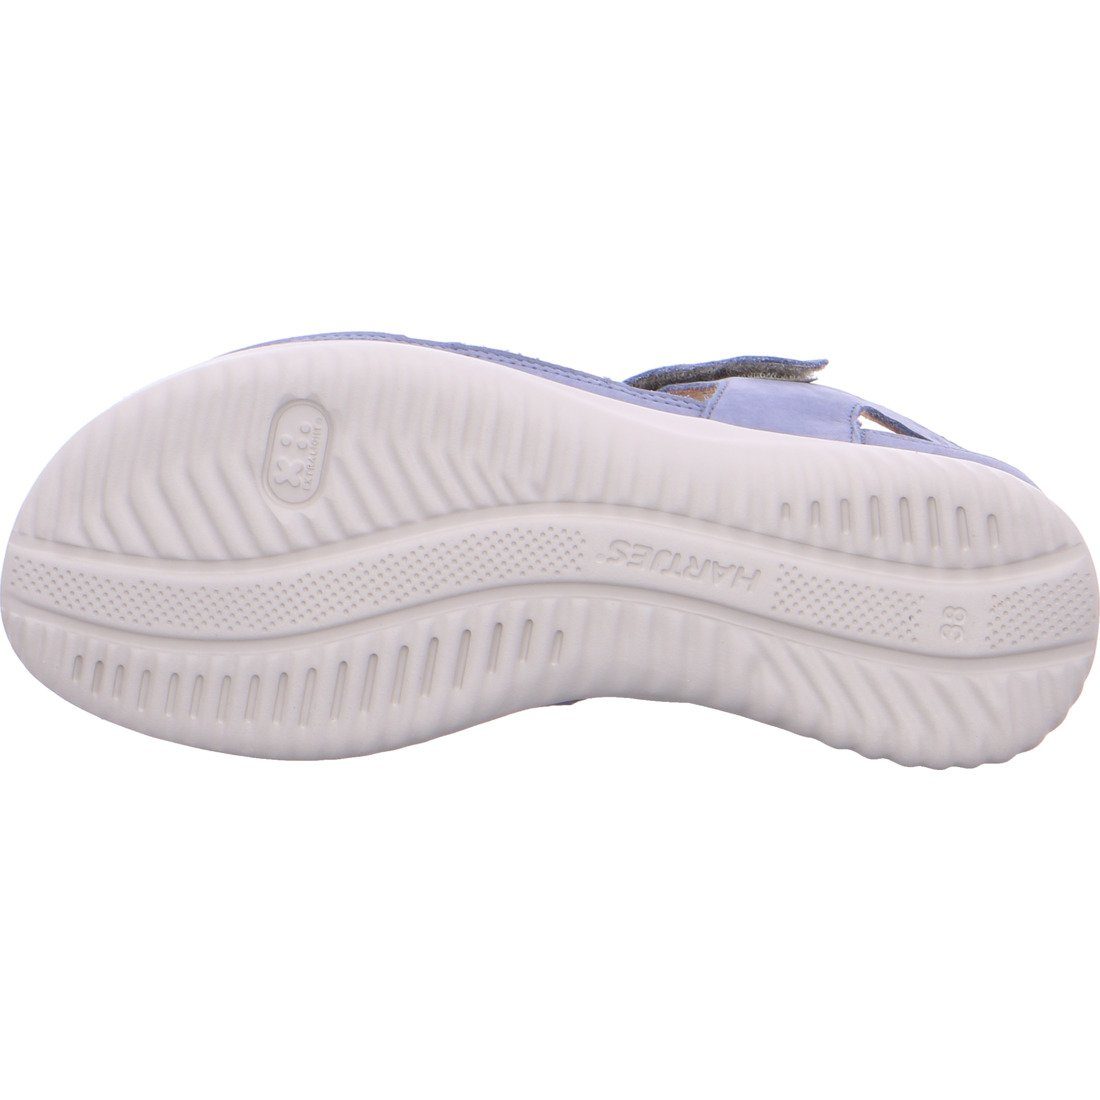 Schuhe, Breeze Sandalette Hartjes 042615 Hartjes Sandalette Damen - Nubuk braun